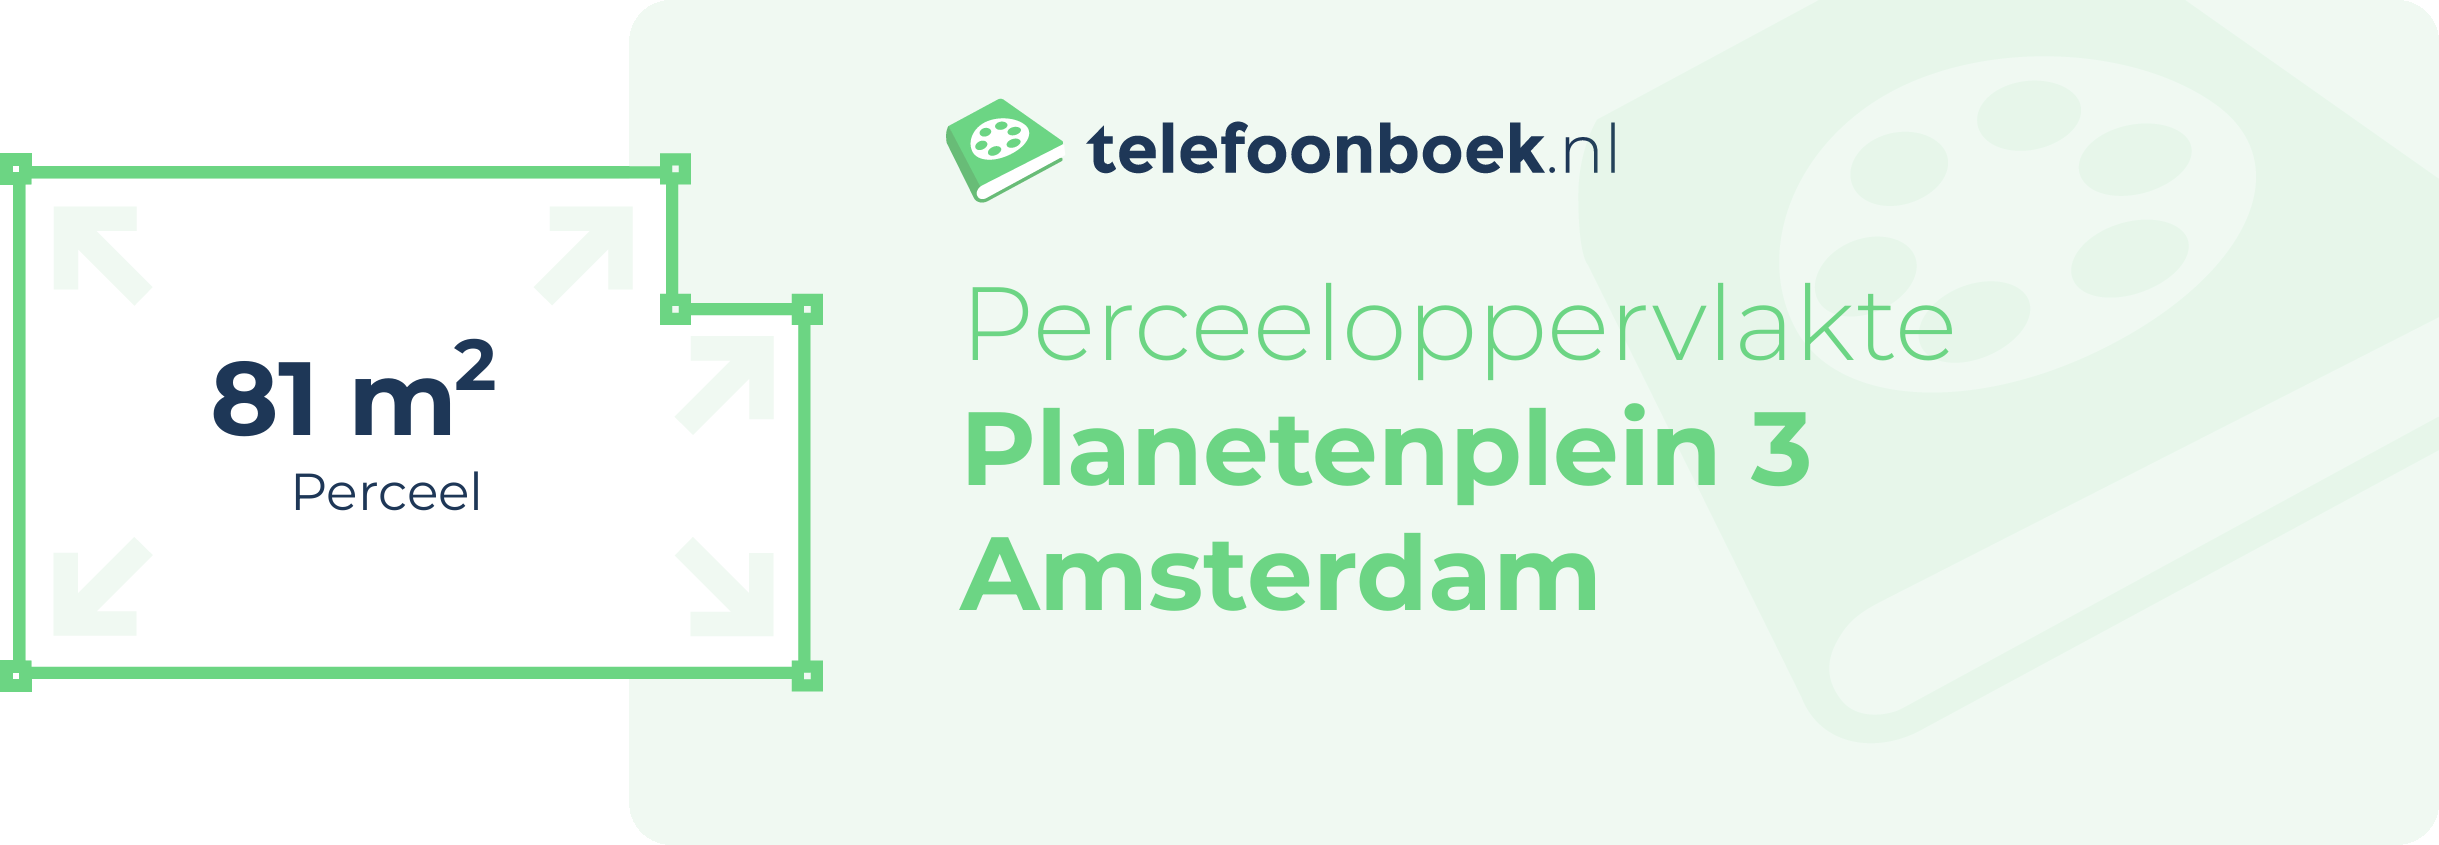 Perceeloppervlakte Planetenplein 3 Amsterdam